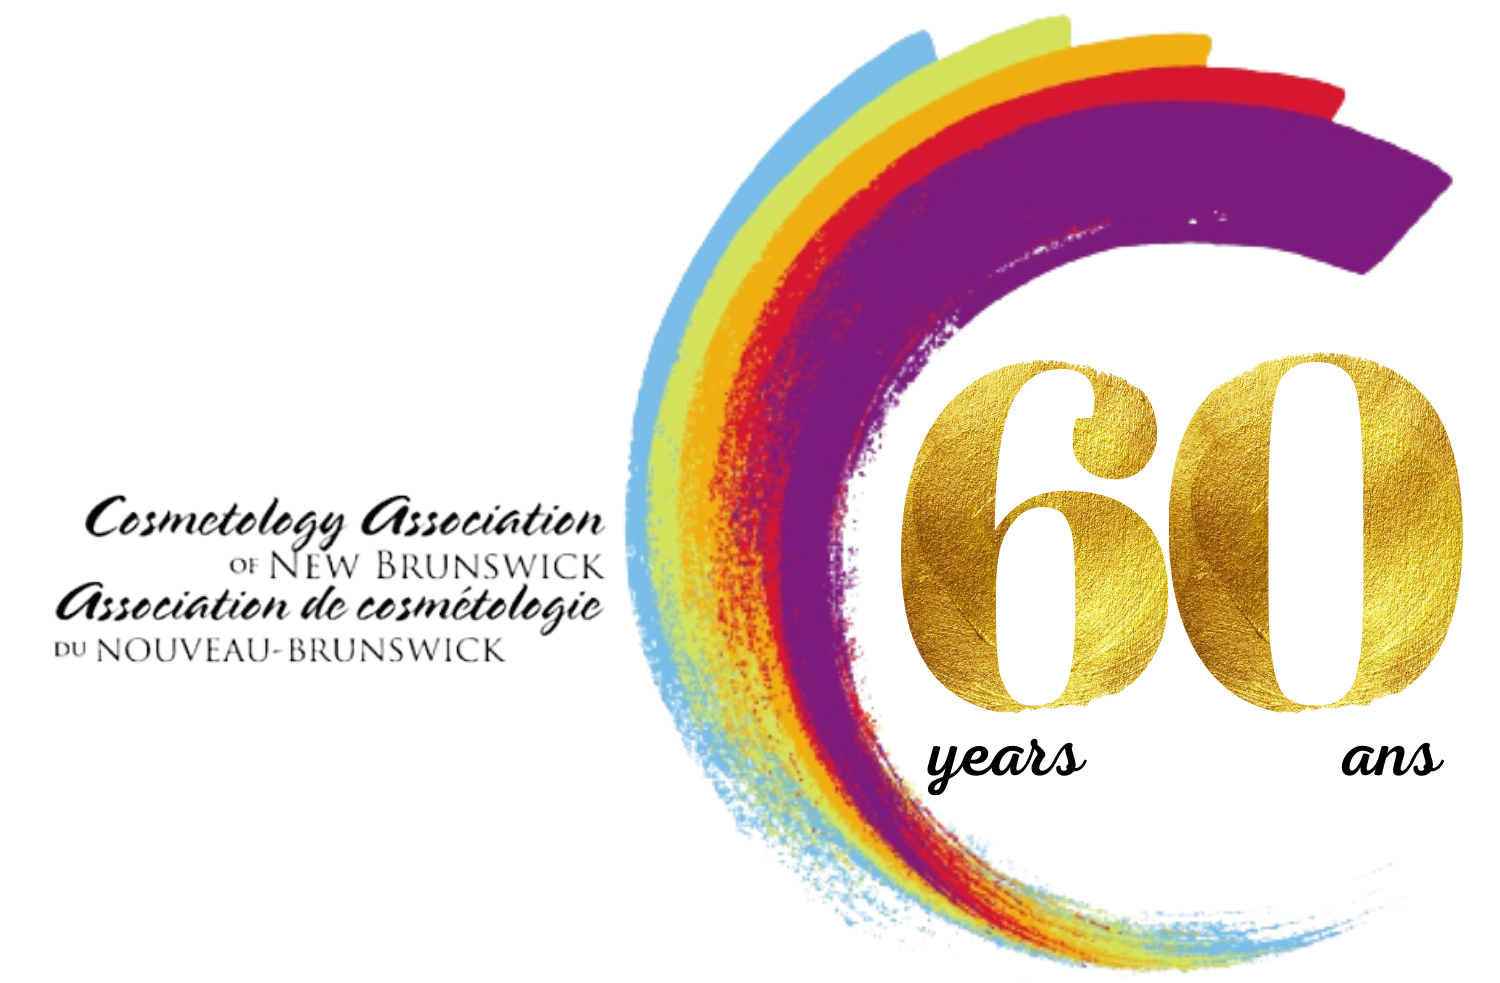 60th logo